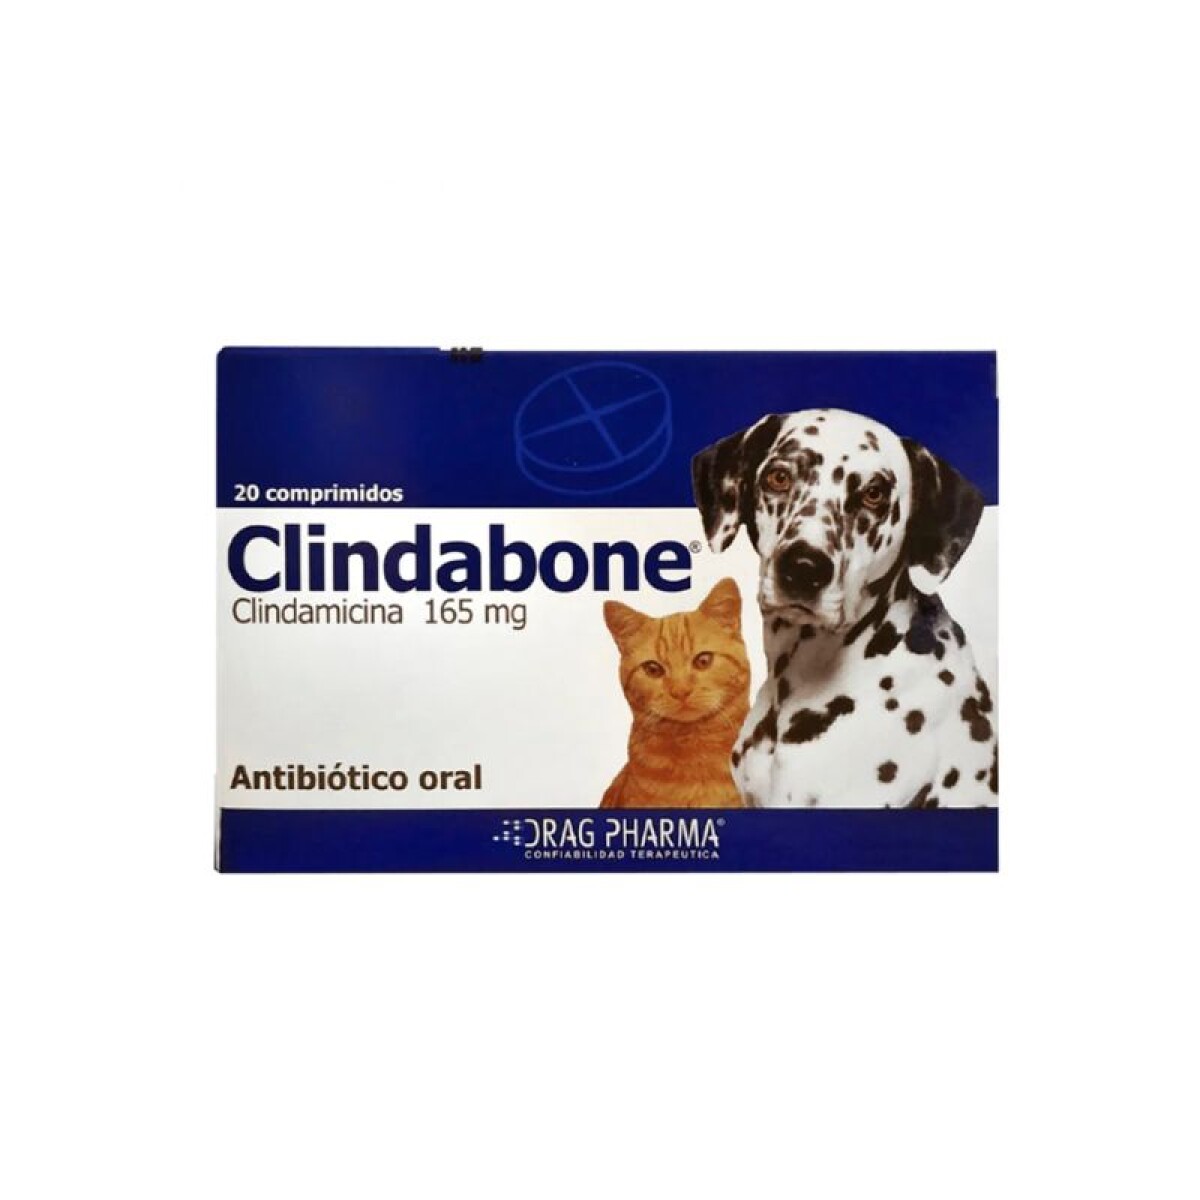 CLINDABONE (CAJA) - Clindabone (caja) 